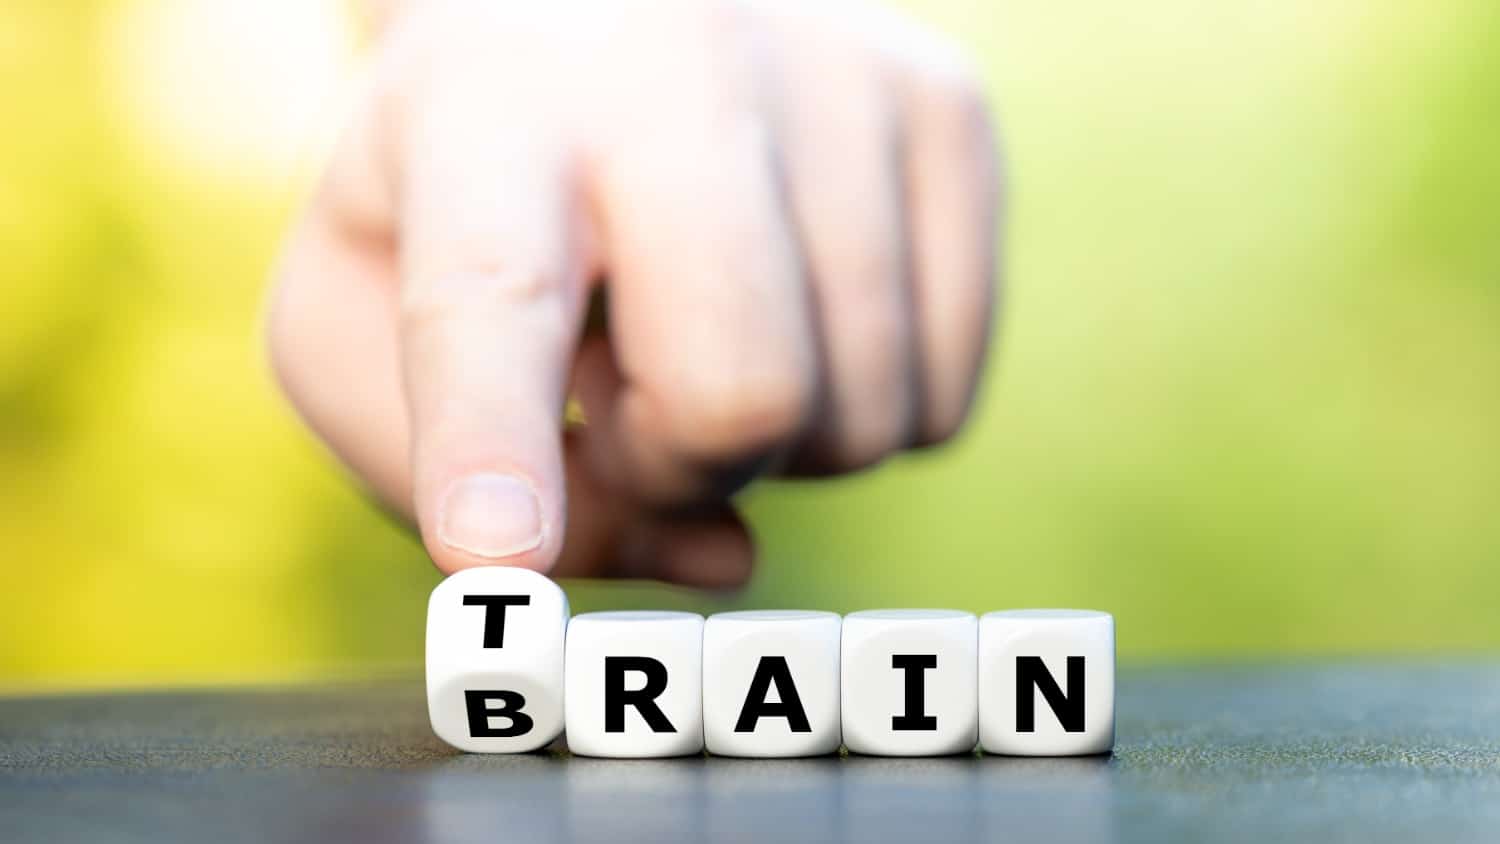 train your brain